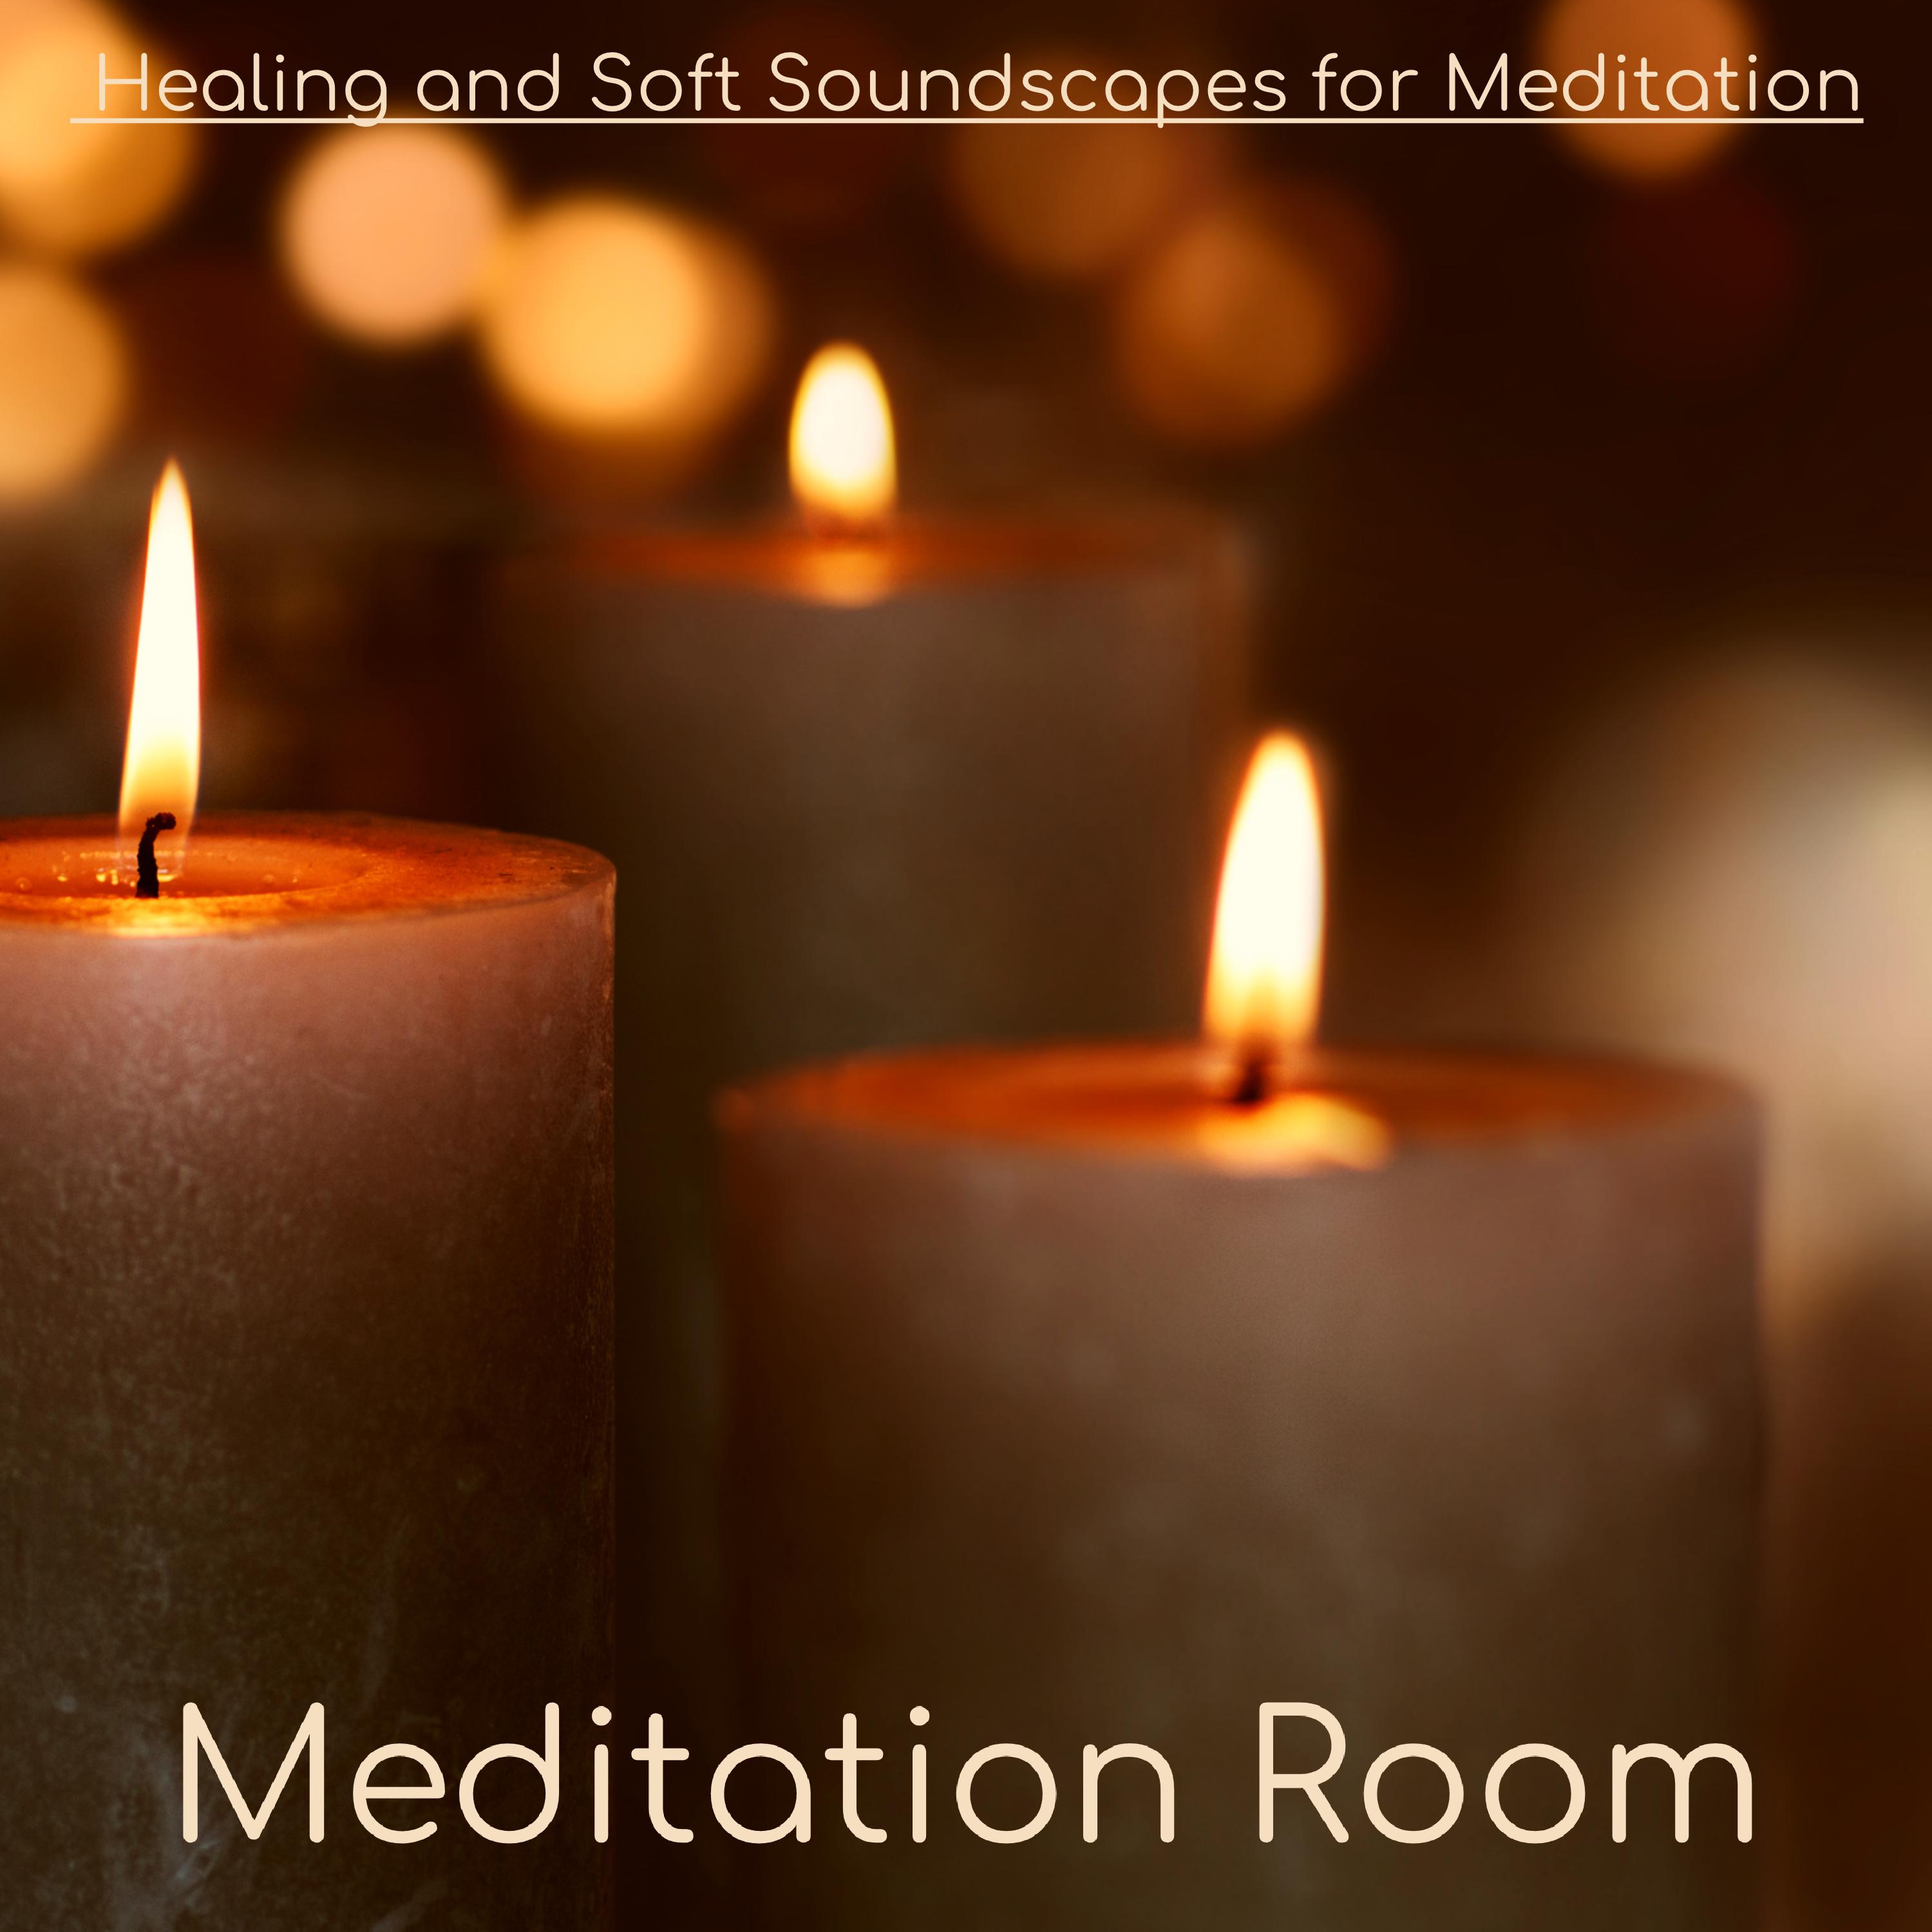 Meditation Room – Healing and Soft Soundscapes for Meditation